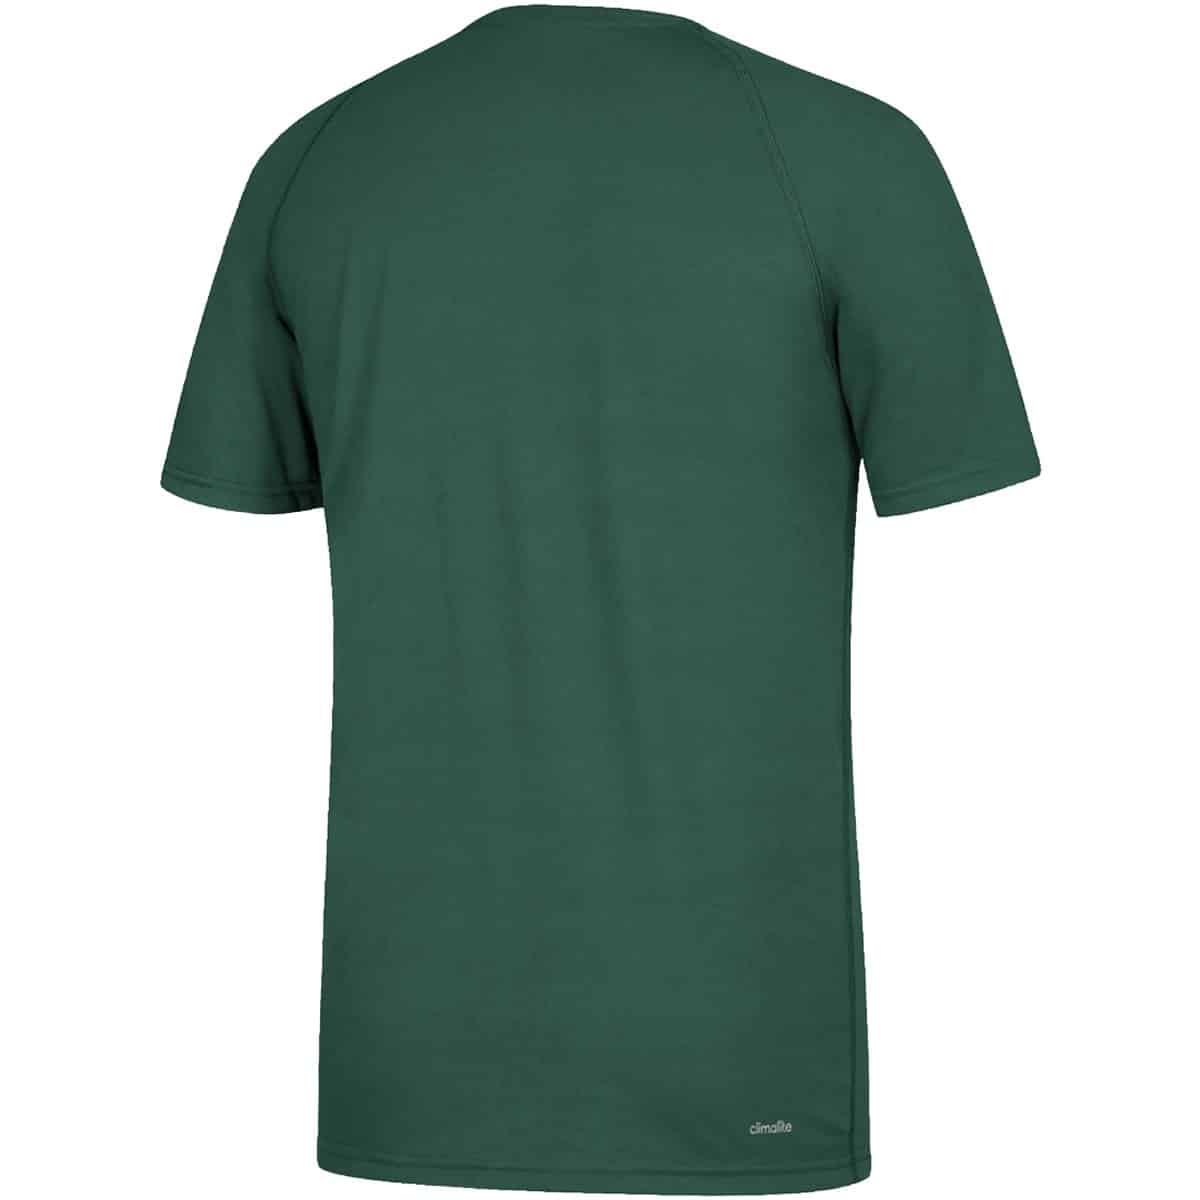 Men's Adidas Ultimate Dark Green T-Shirt Tee - Detroit Game Gear